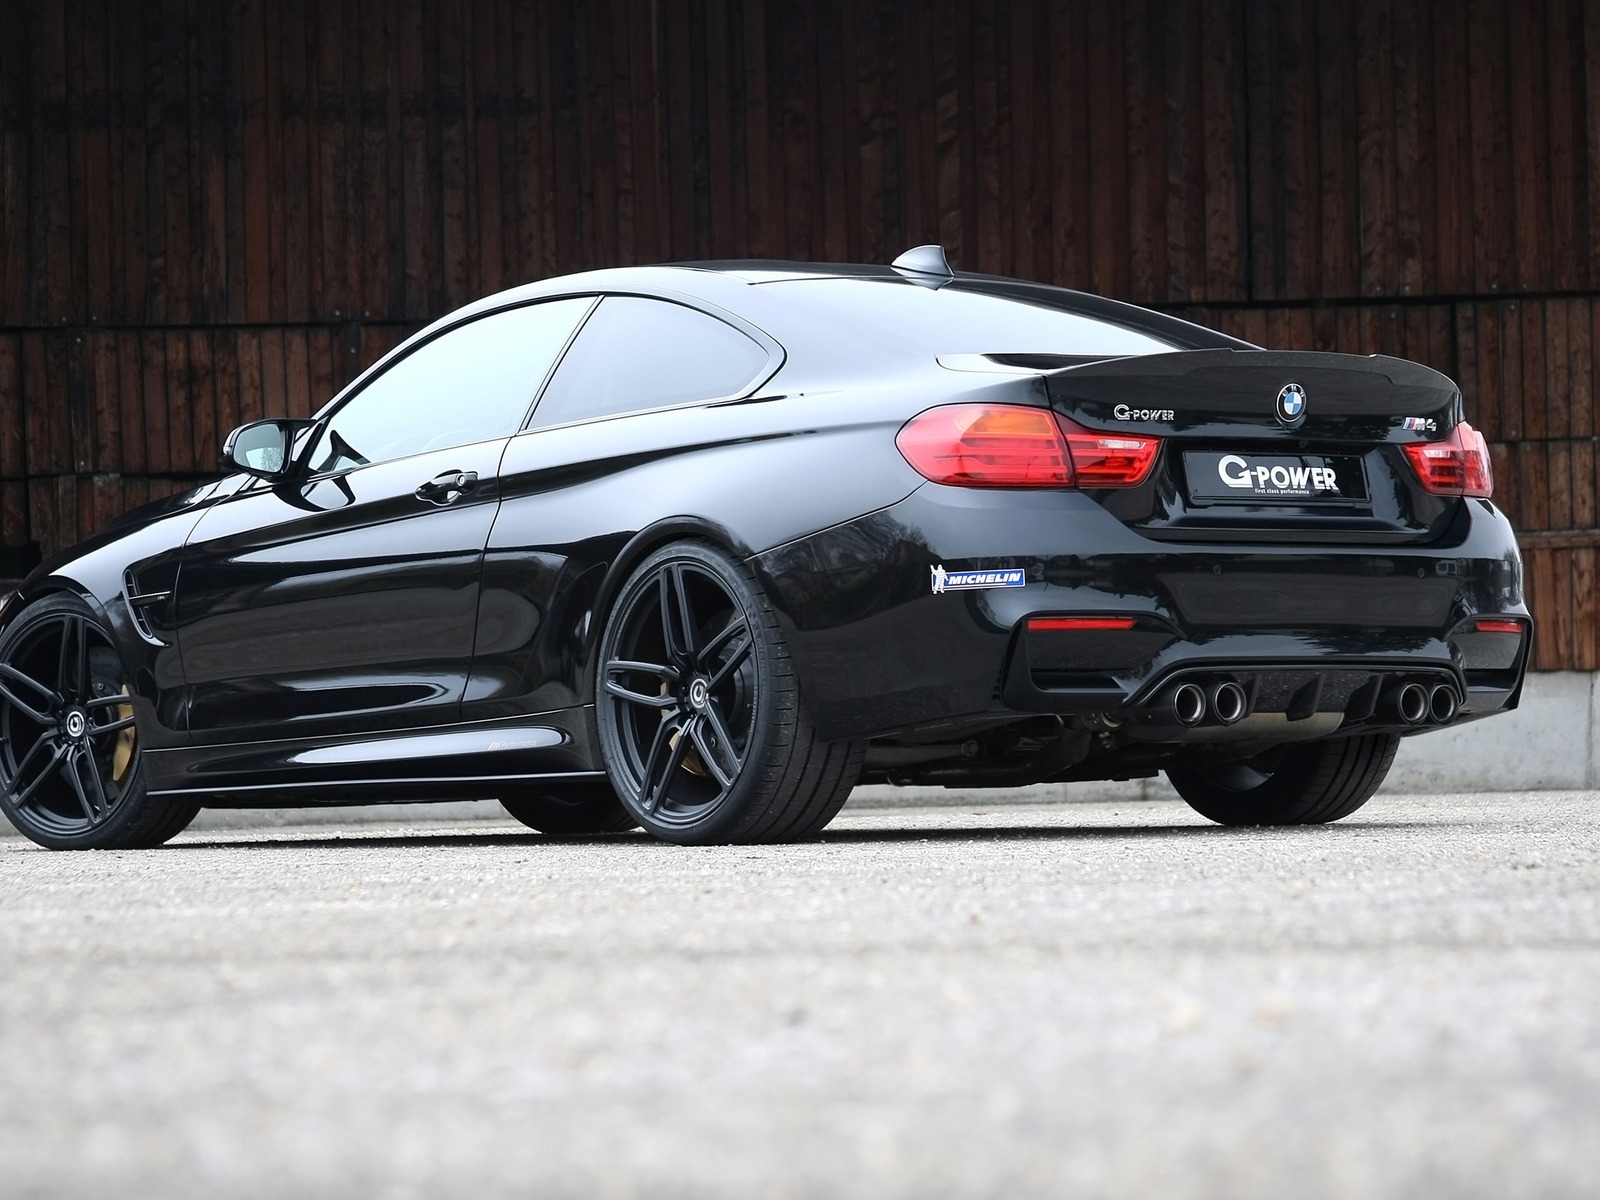 Black BMW M4 G-Power 2014 Rear for 1600 x 1200 resolution